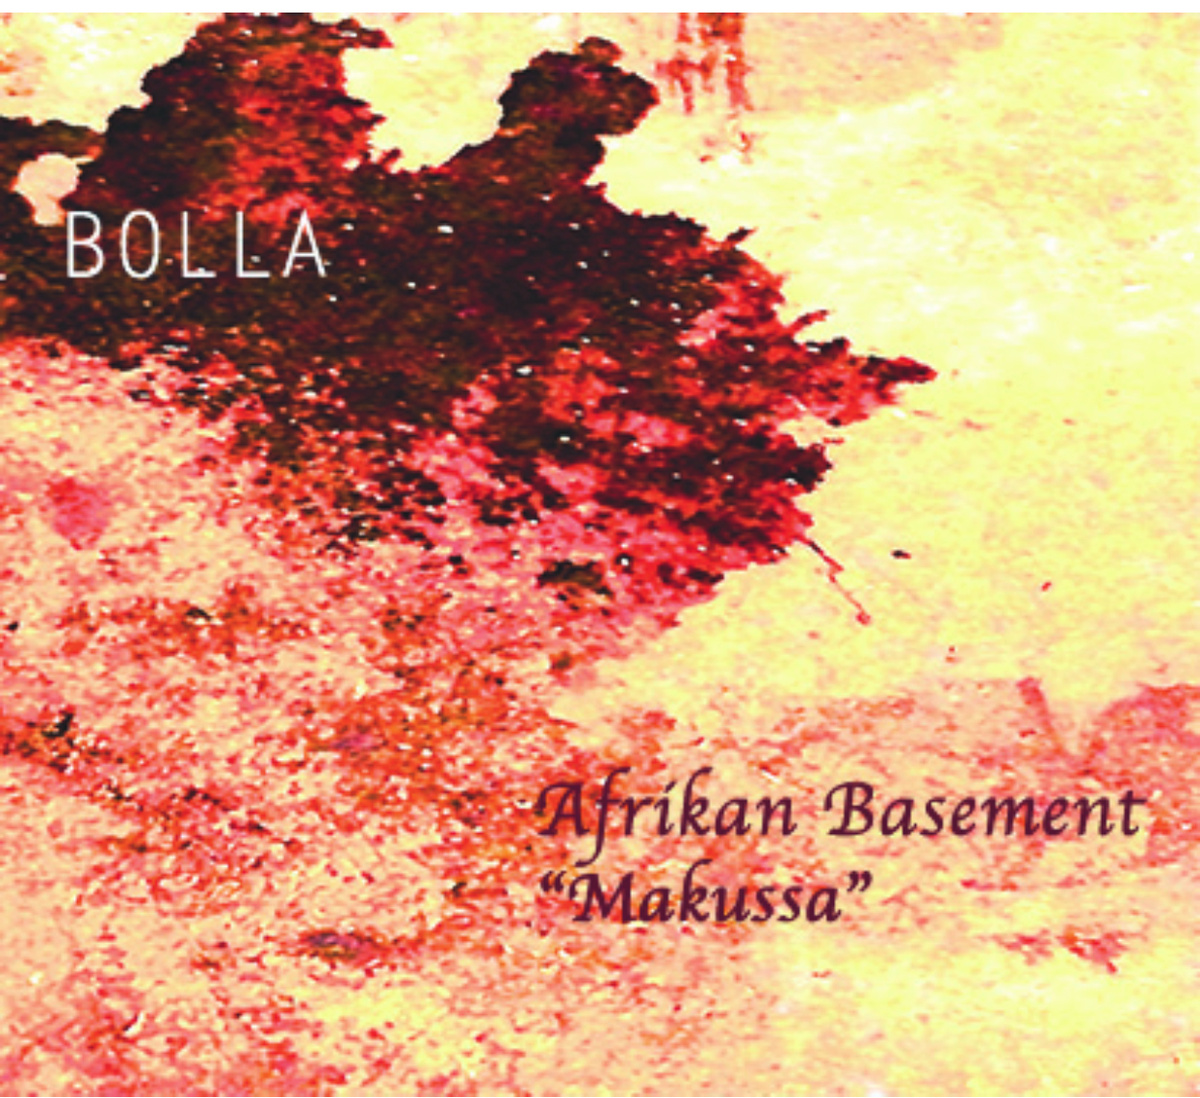 00-Bolla - Afrikan Basement-Makussa-2015-